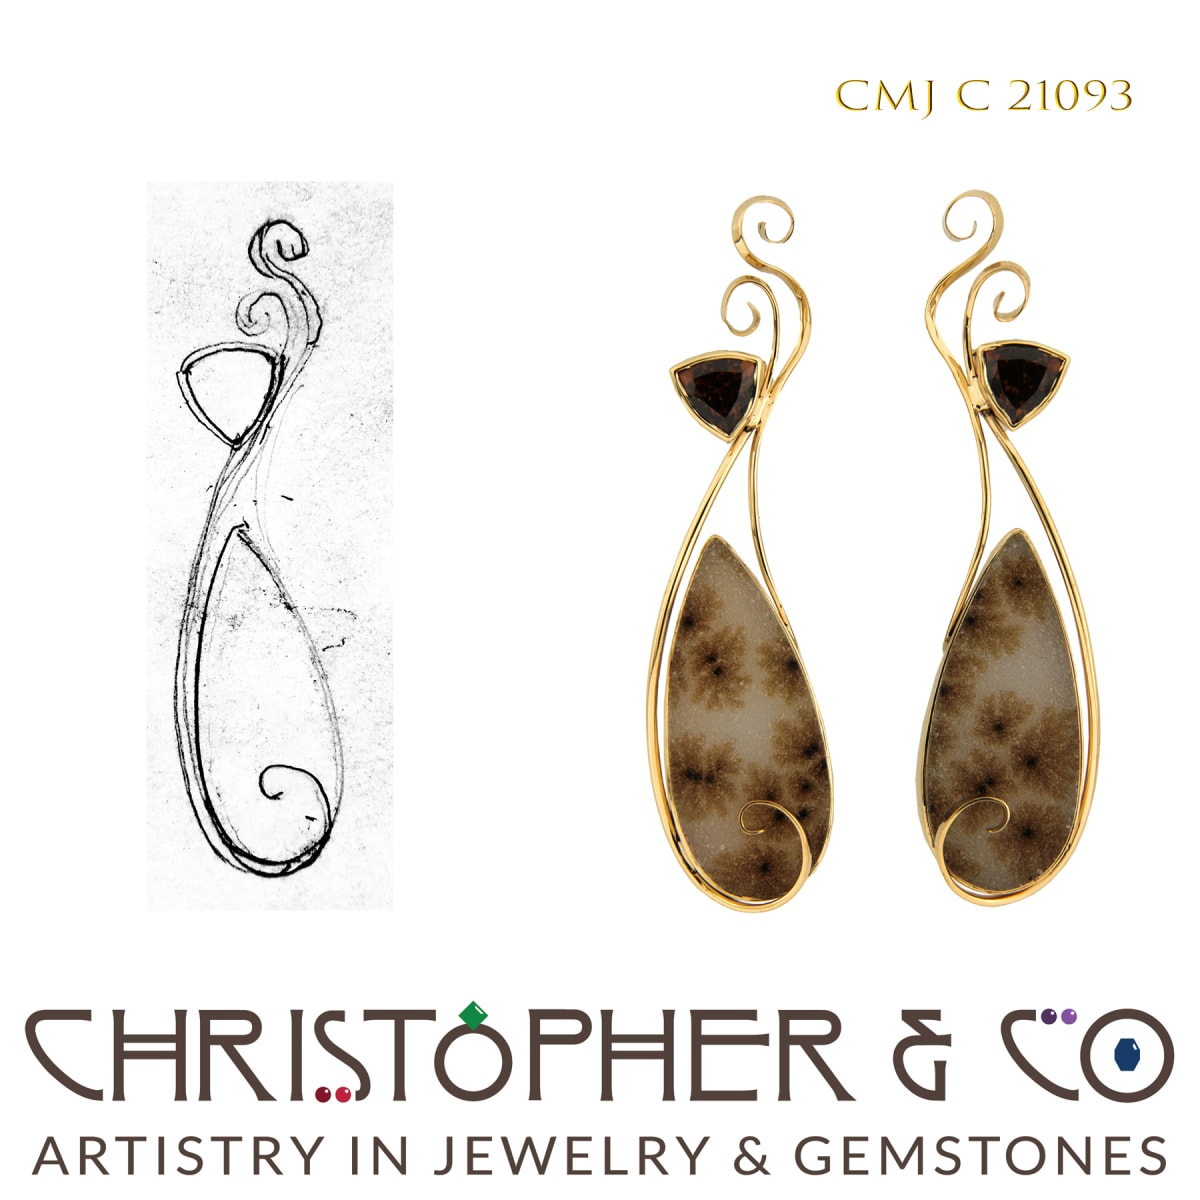 CMJ C 21092 Gold Earrings by Christopher M. Jupp  Image: CMJ C 21092 Gold Earrings set with Drusy & Zircon by Christopher M. Jupp